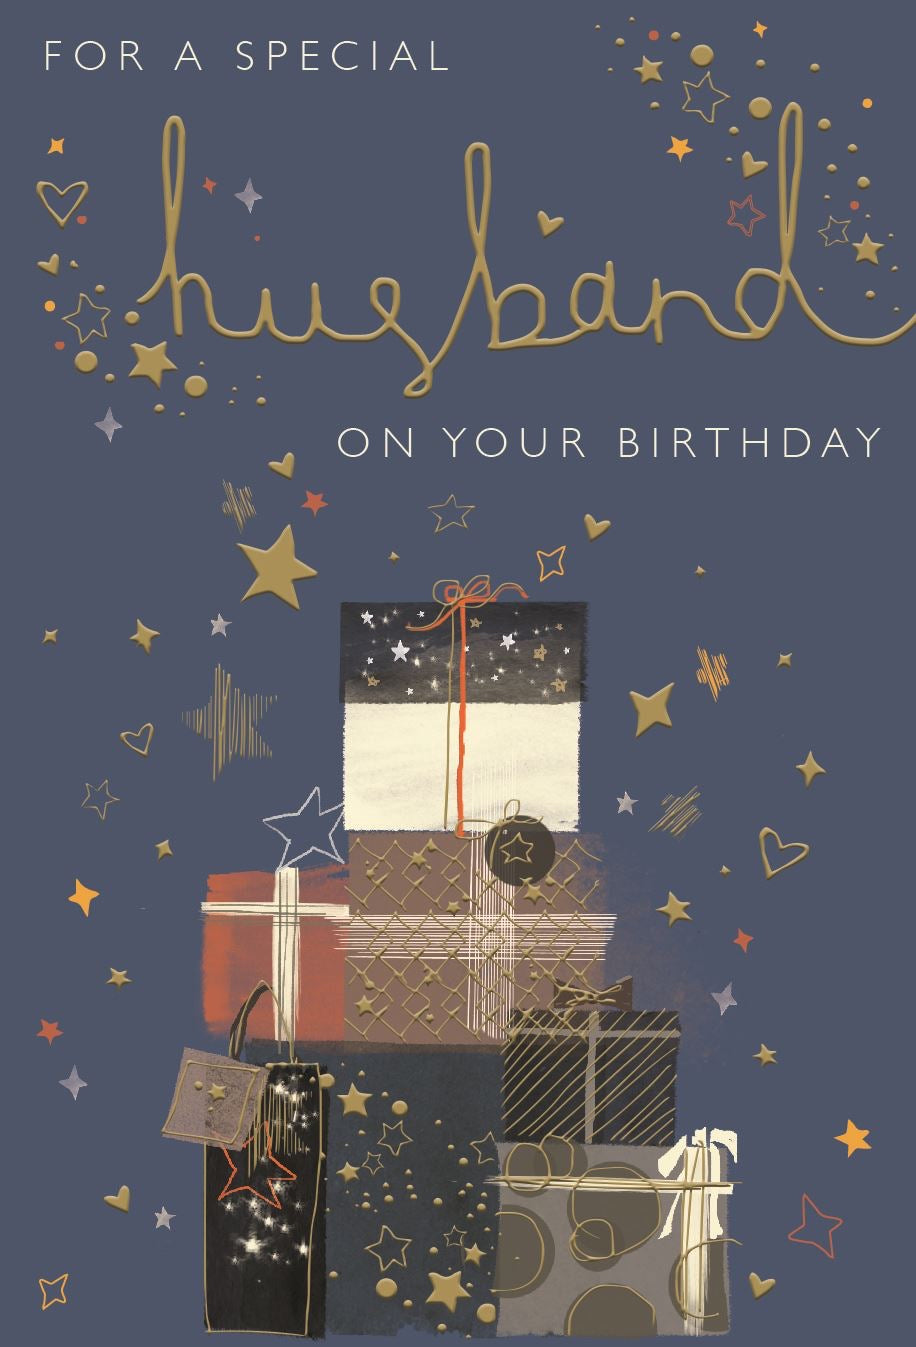 Husband birthday card - birthday gifts